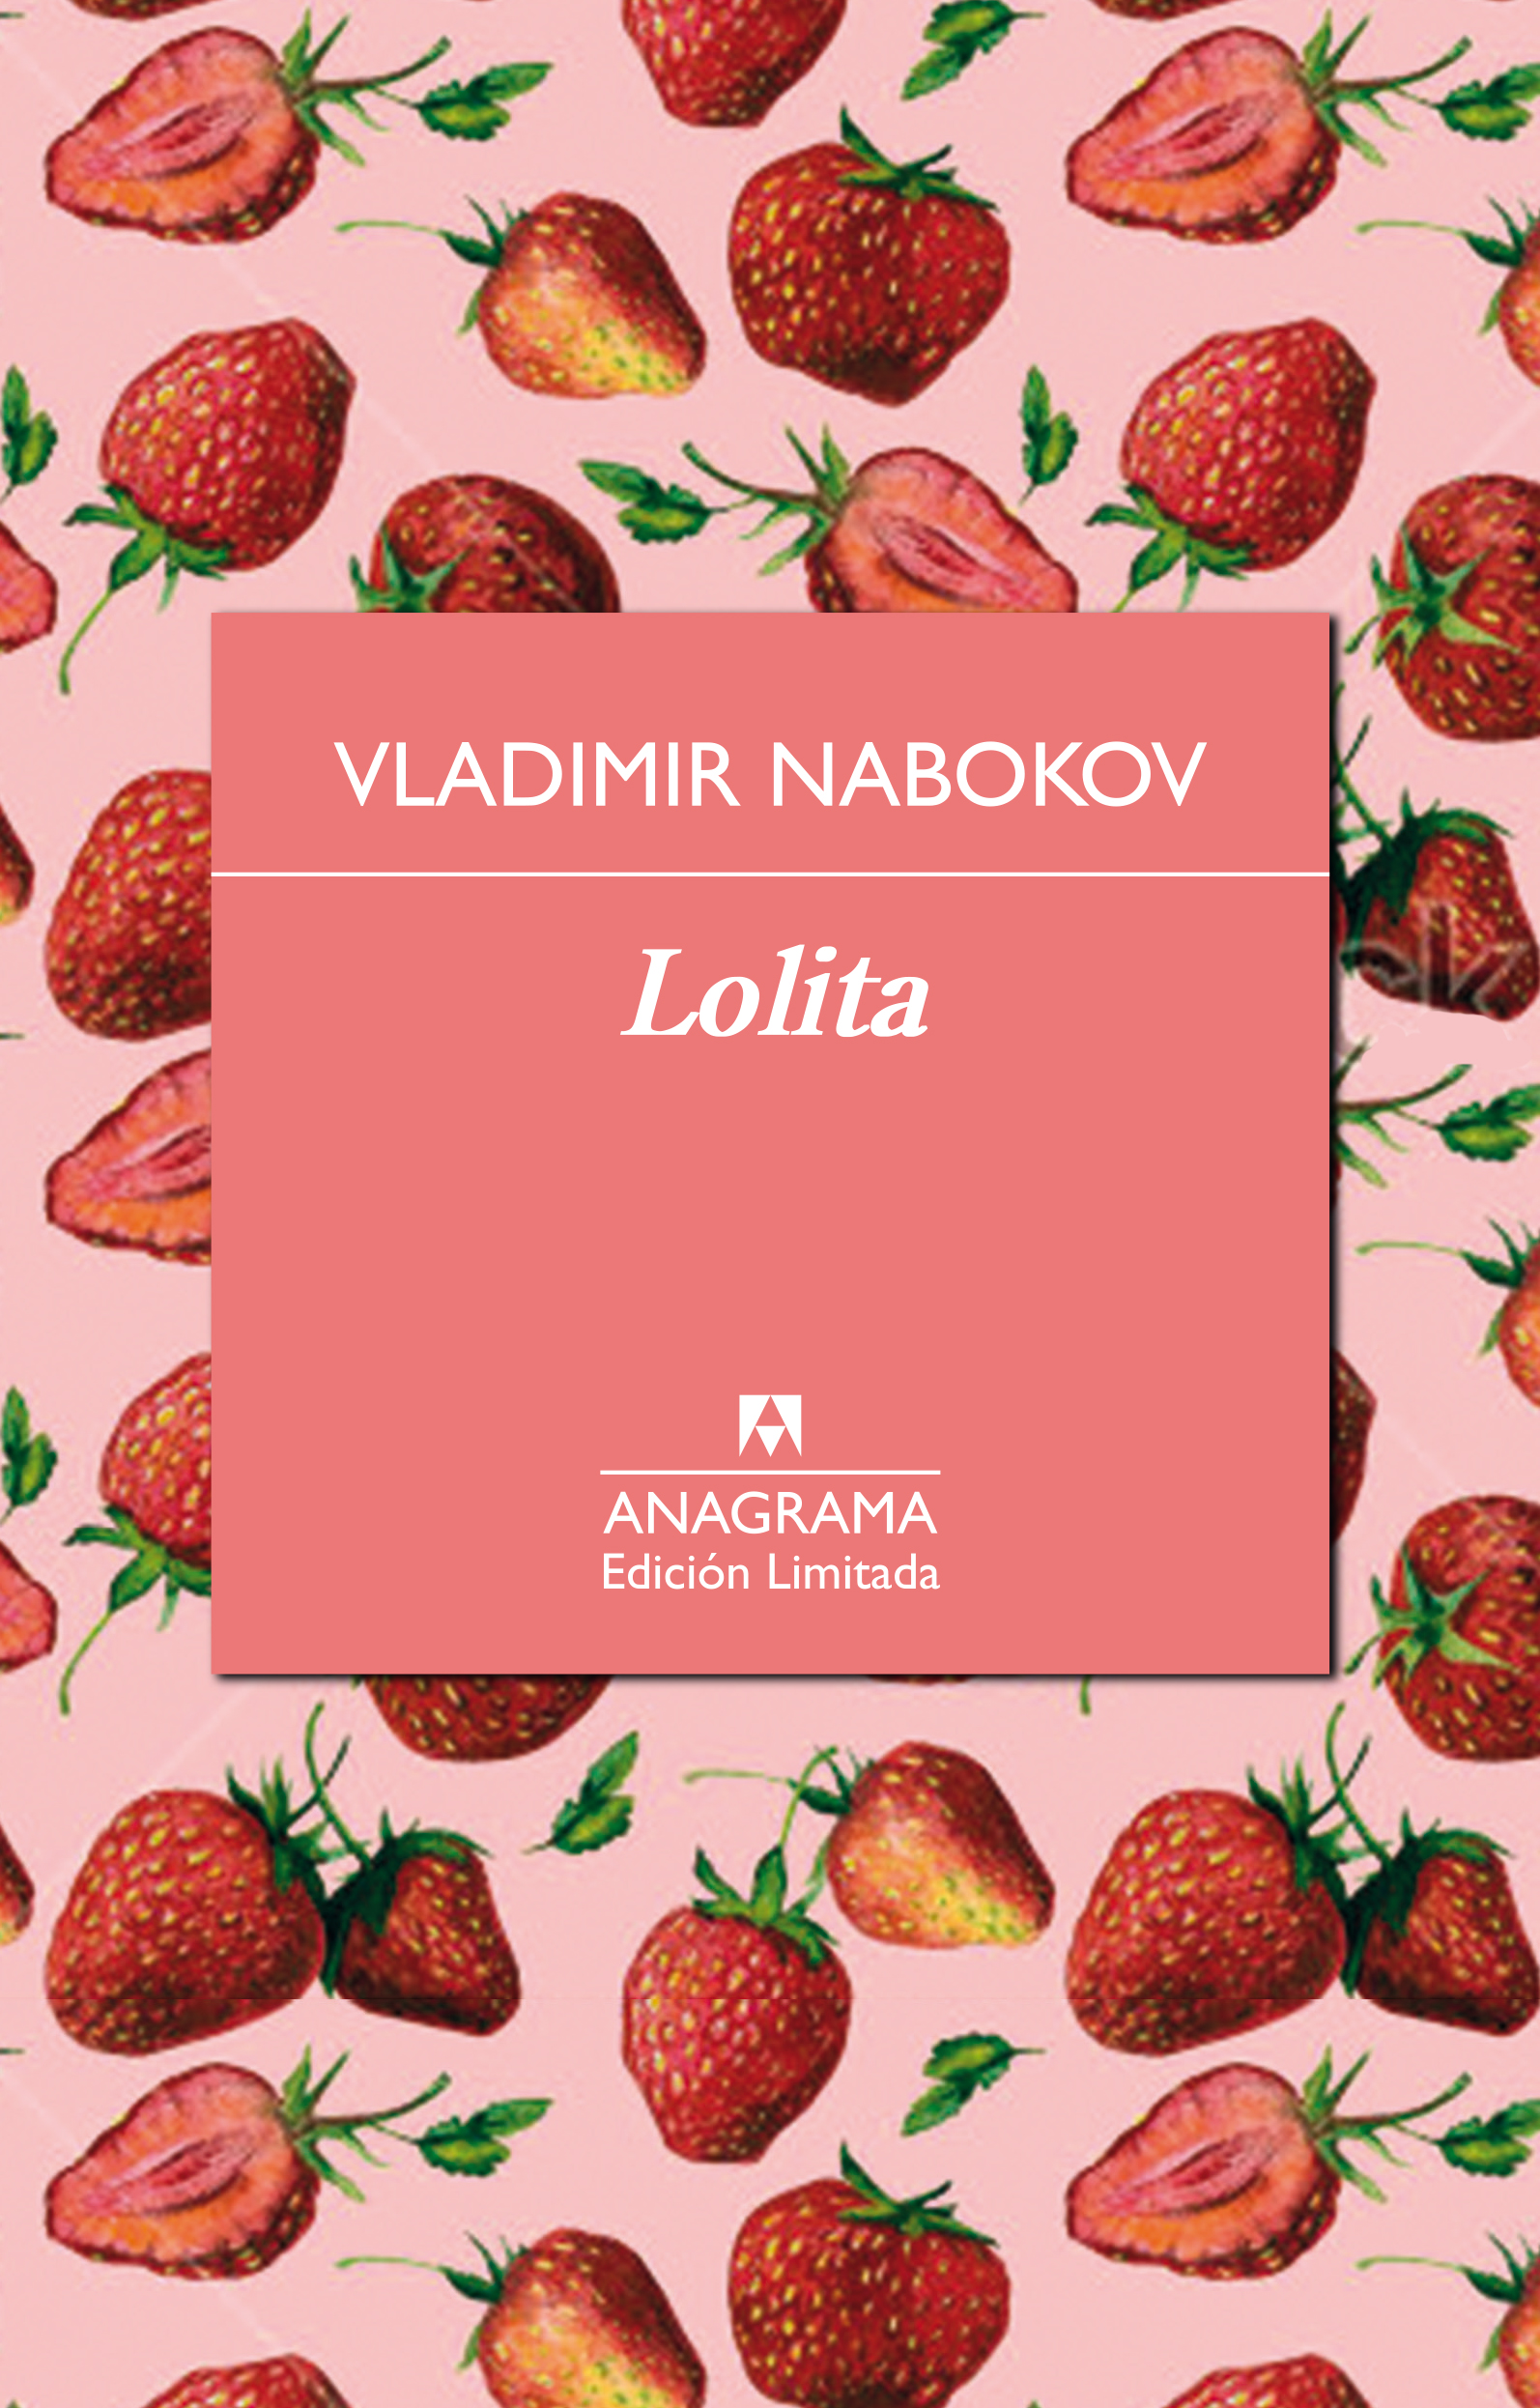 Resultado de imagen de vladimir nabokov lolita